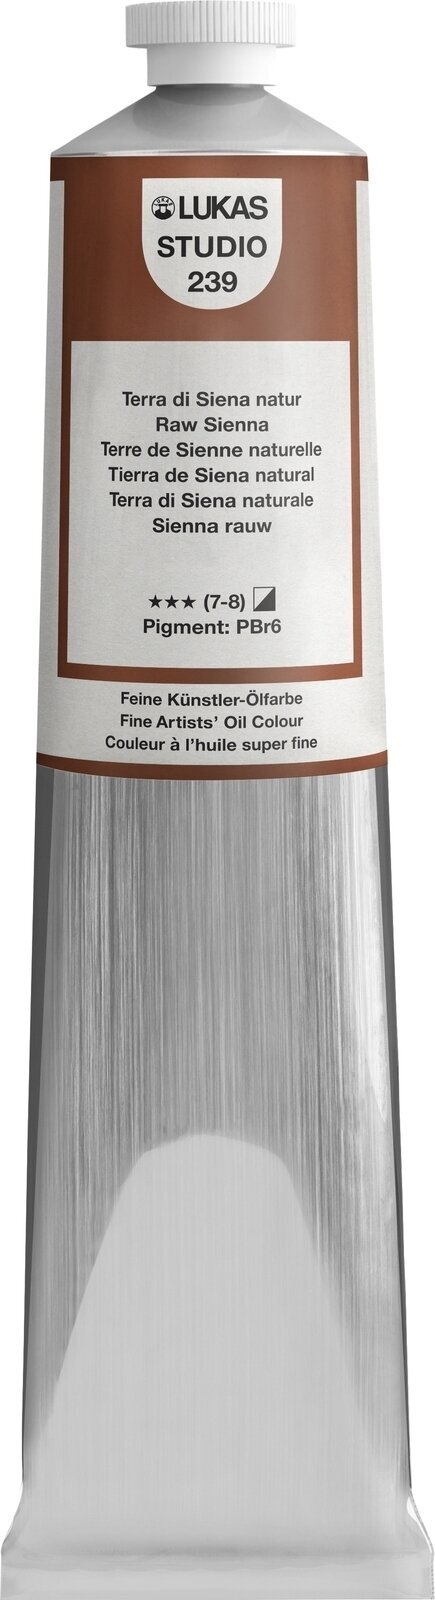 Ölfarbe Lukas Studio Oil Paint Aluminium Tube Ölgemälde Raw Sienna 200 ml 1 Stck